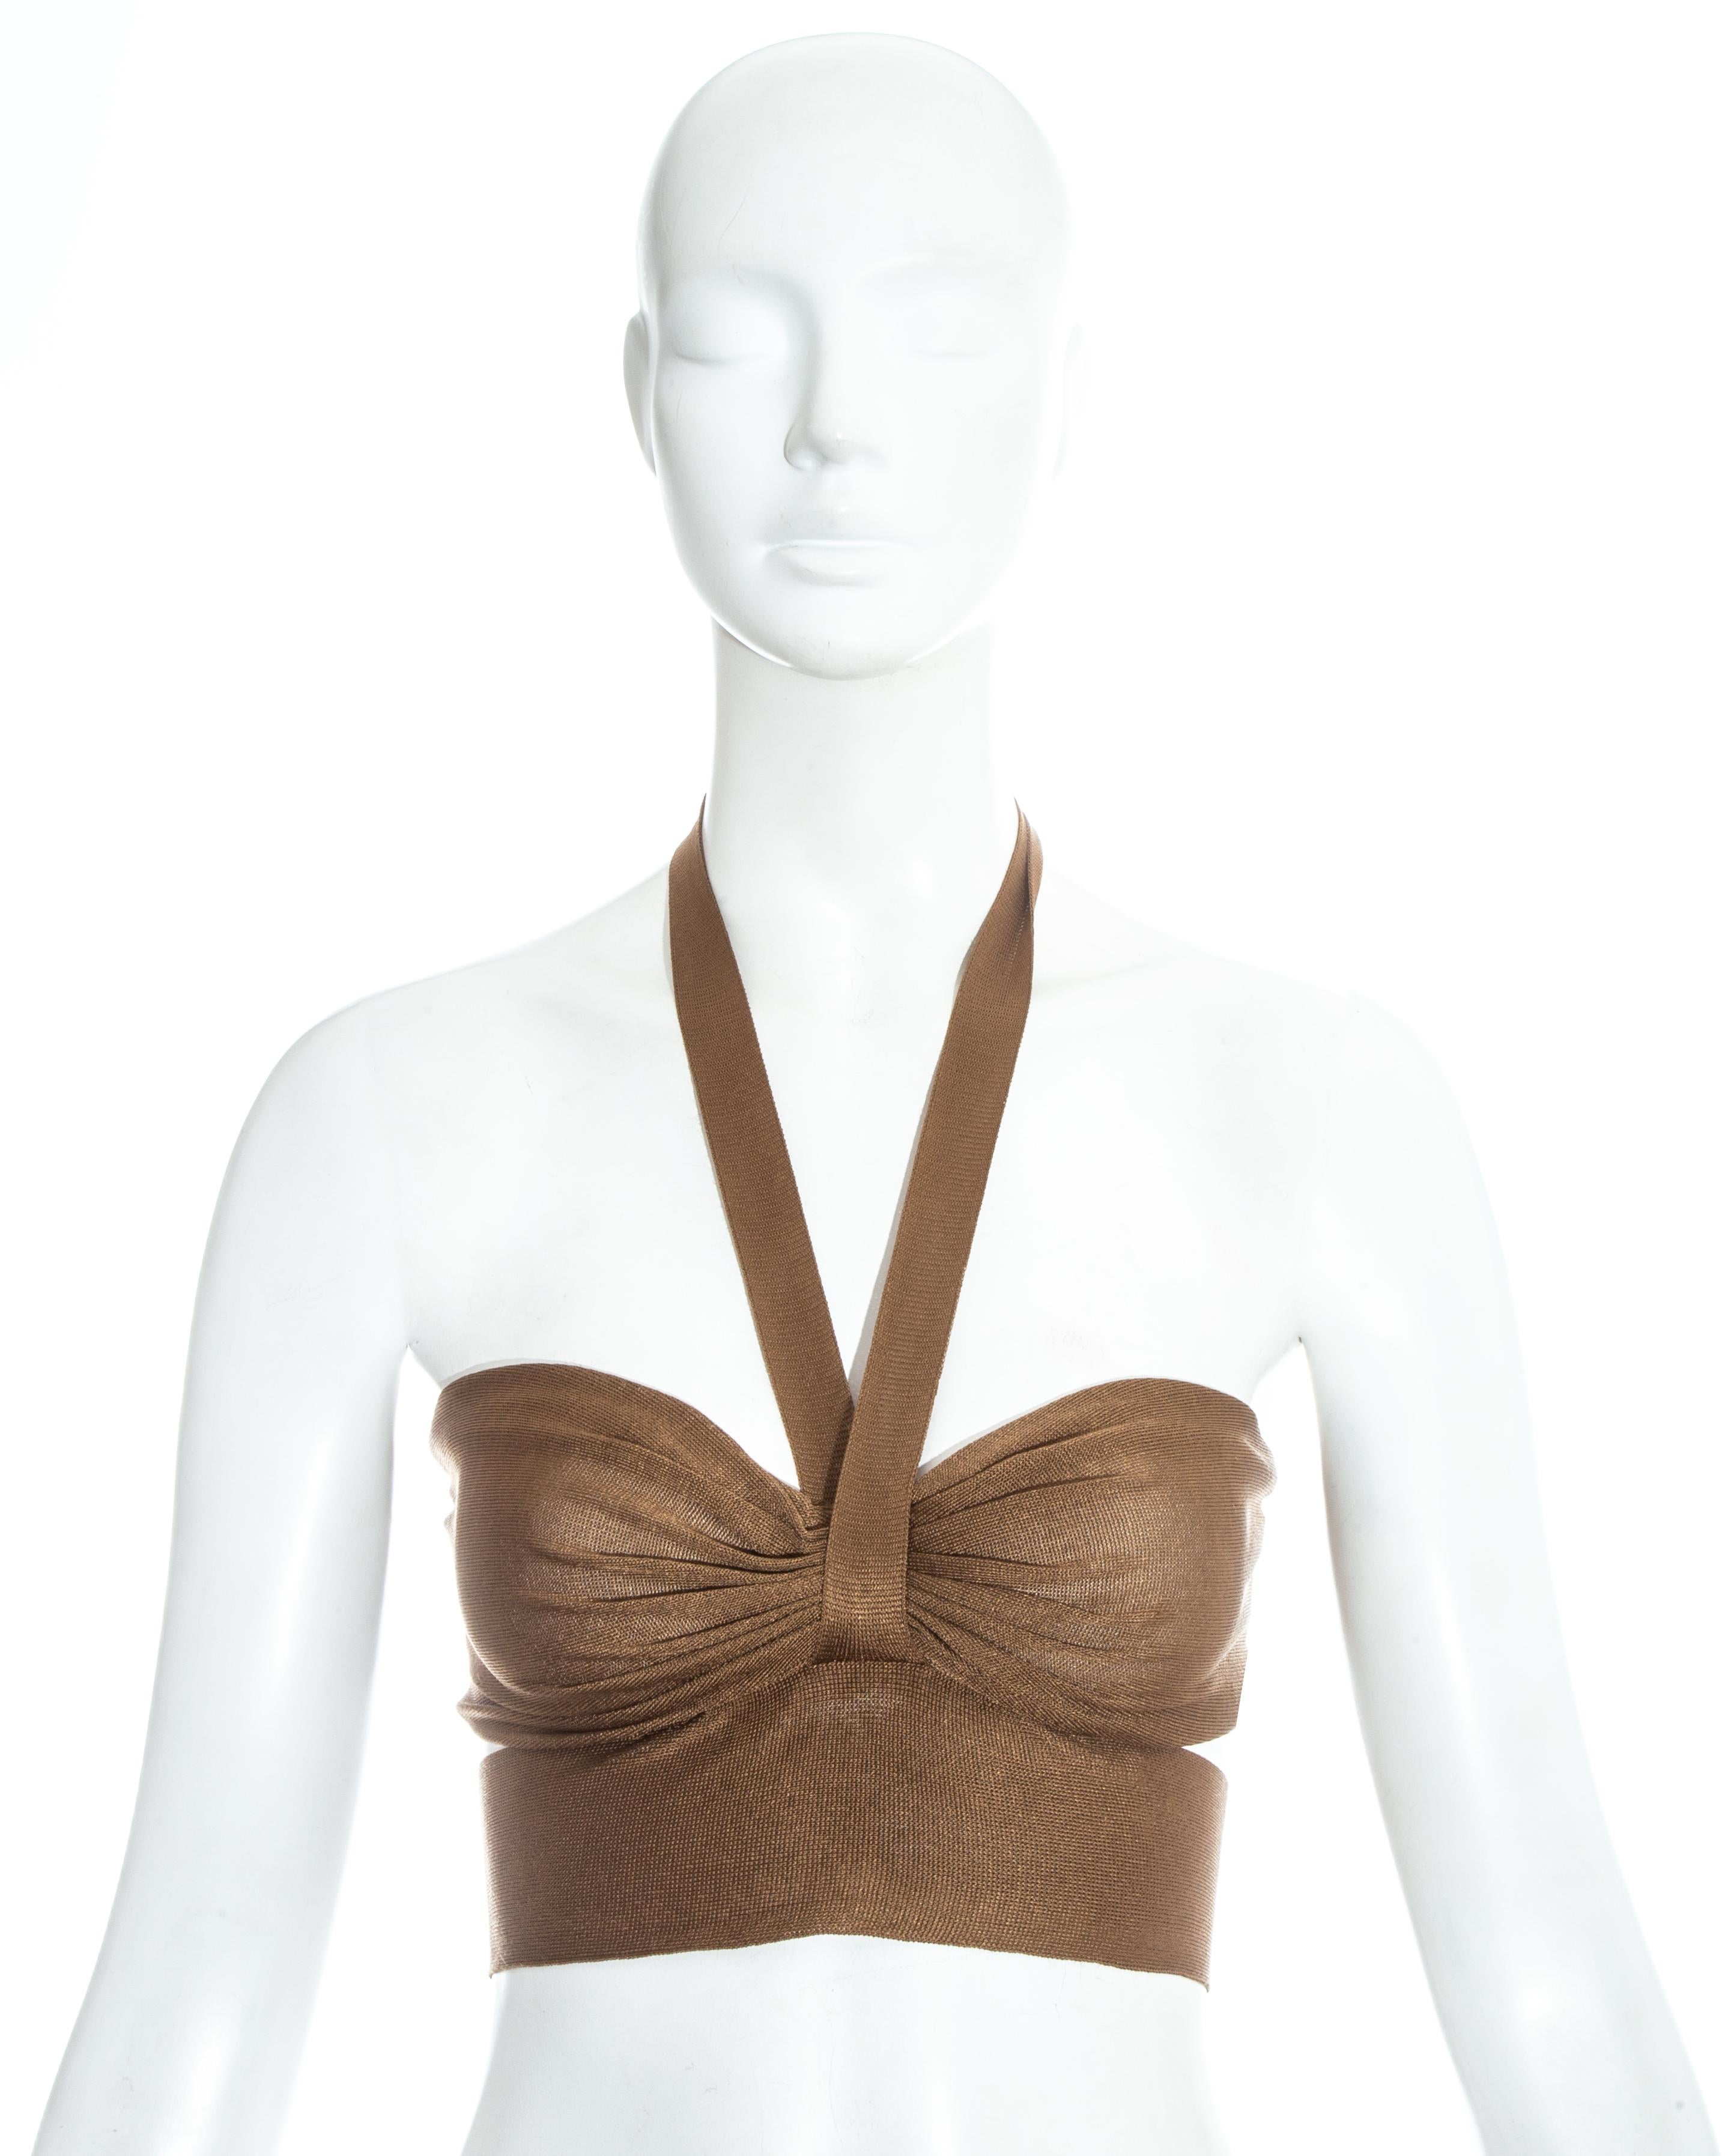 Azzedine Alaia bronze acetate knit halter cropped bra top

Spring-Summer 1986
